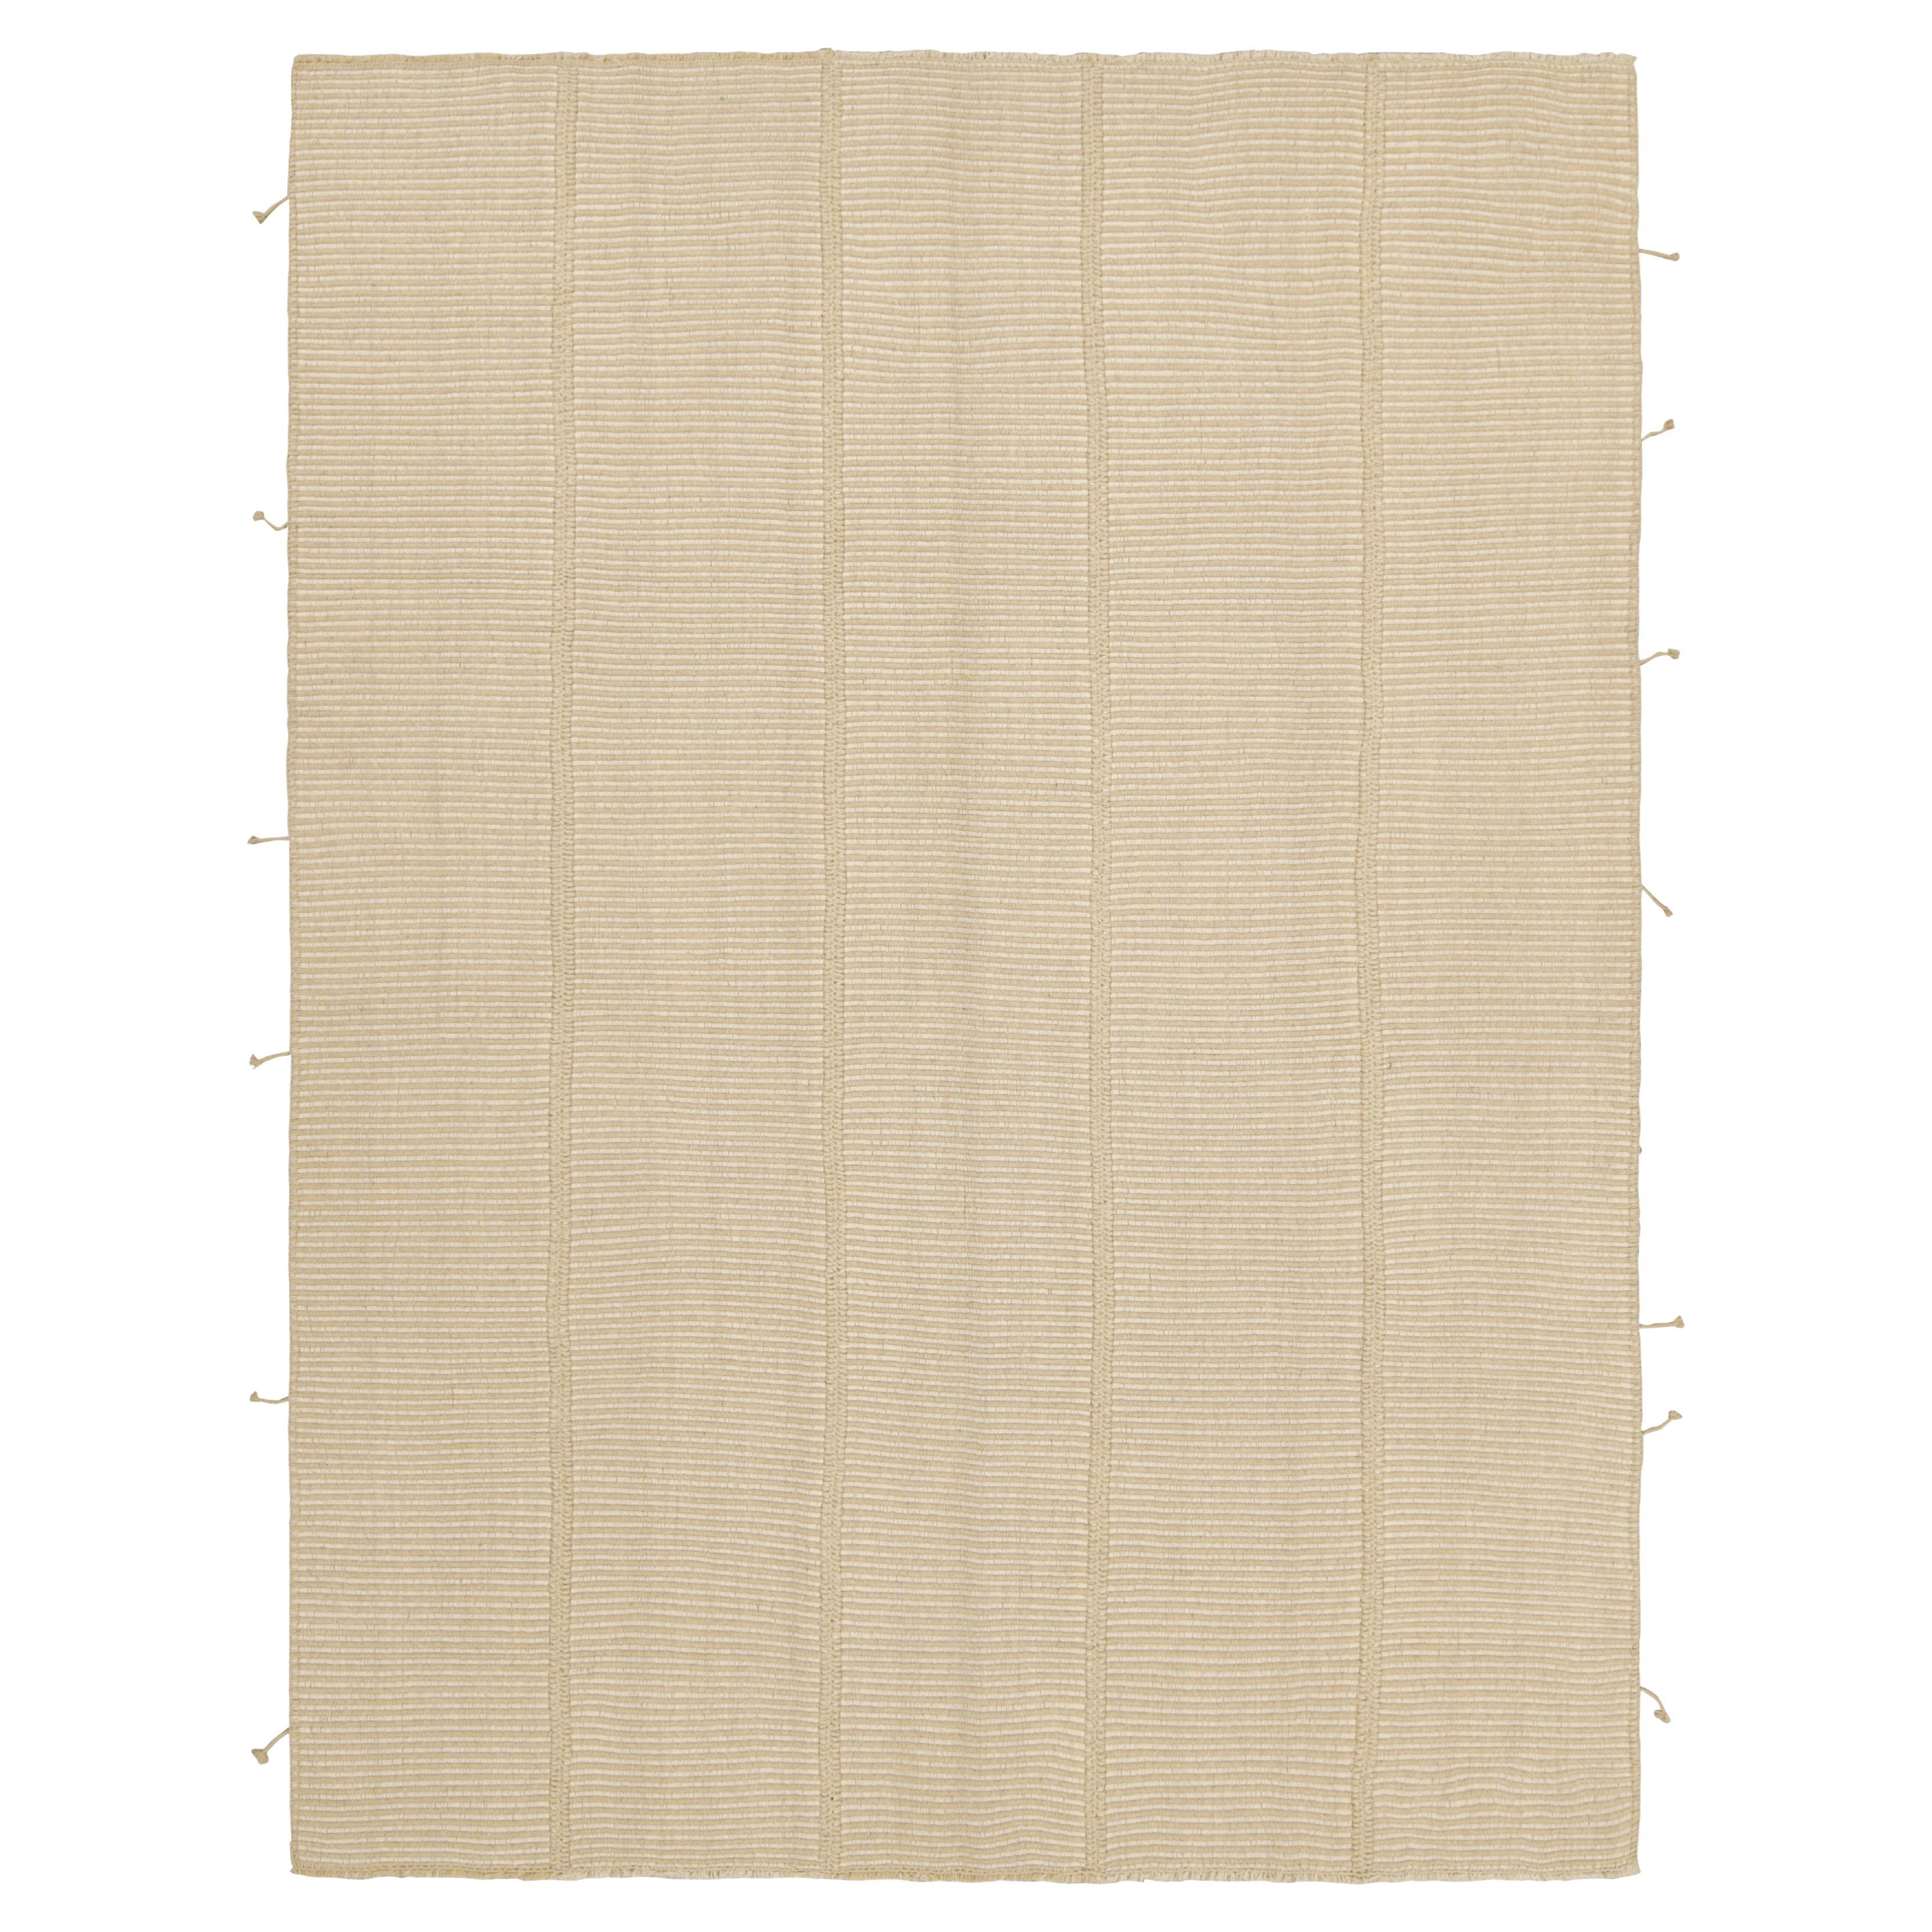 Rug & Kilim’s Contemporary Kilim in Cream White and Beige Textural Stripes